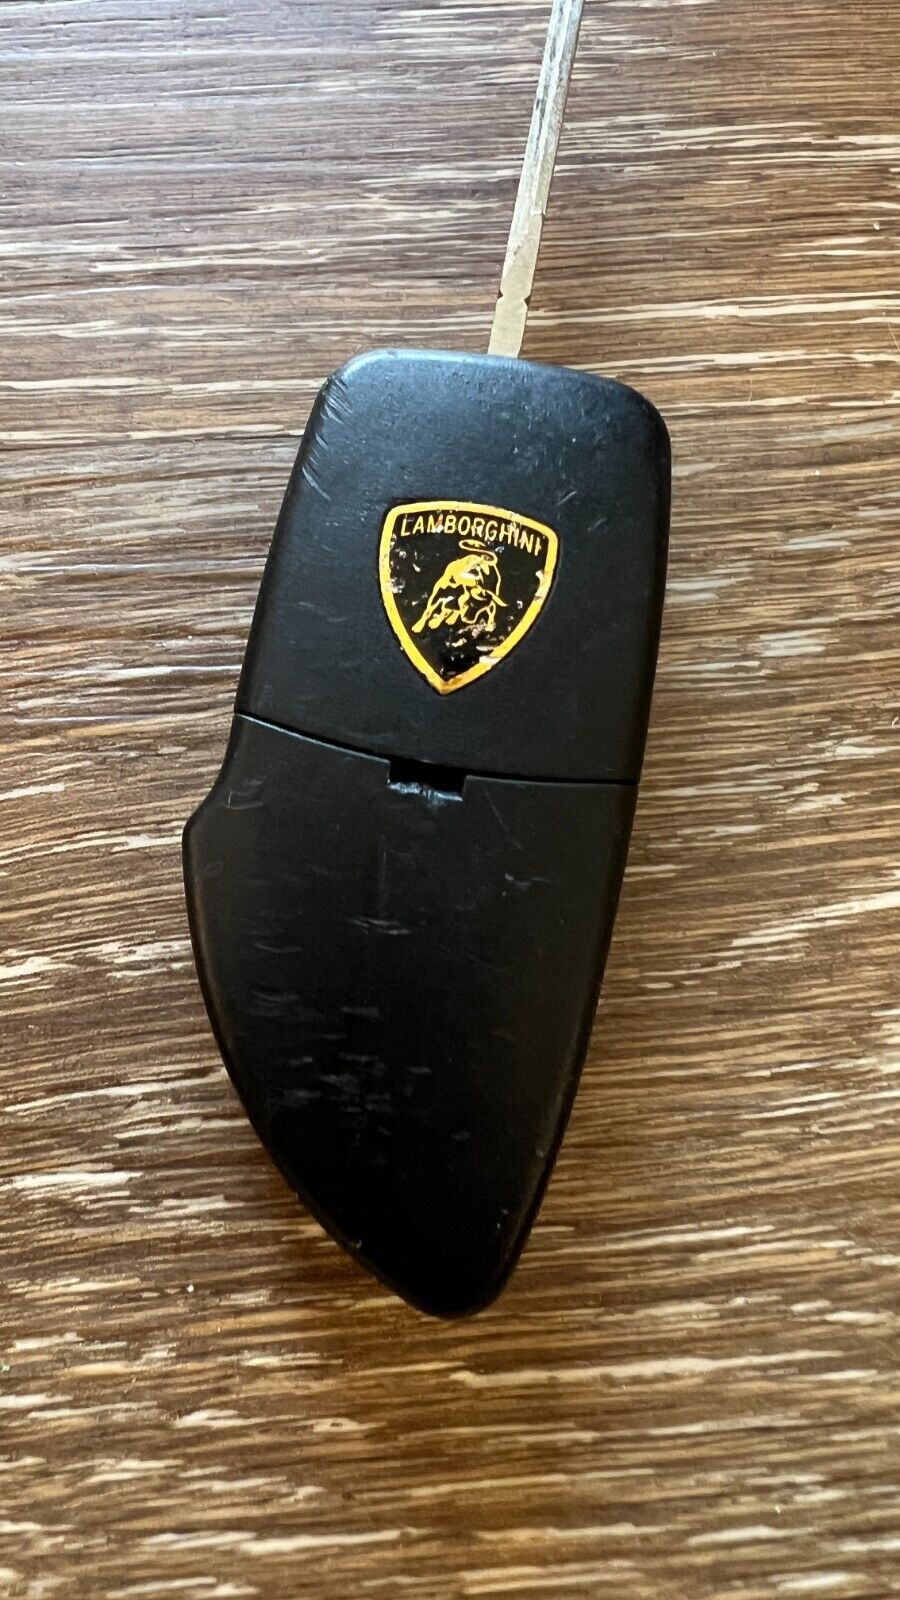 2004 Lamborghini Gallardo Key Oem Remote